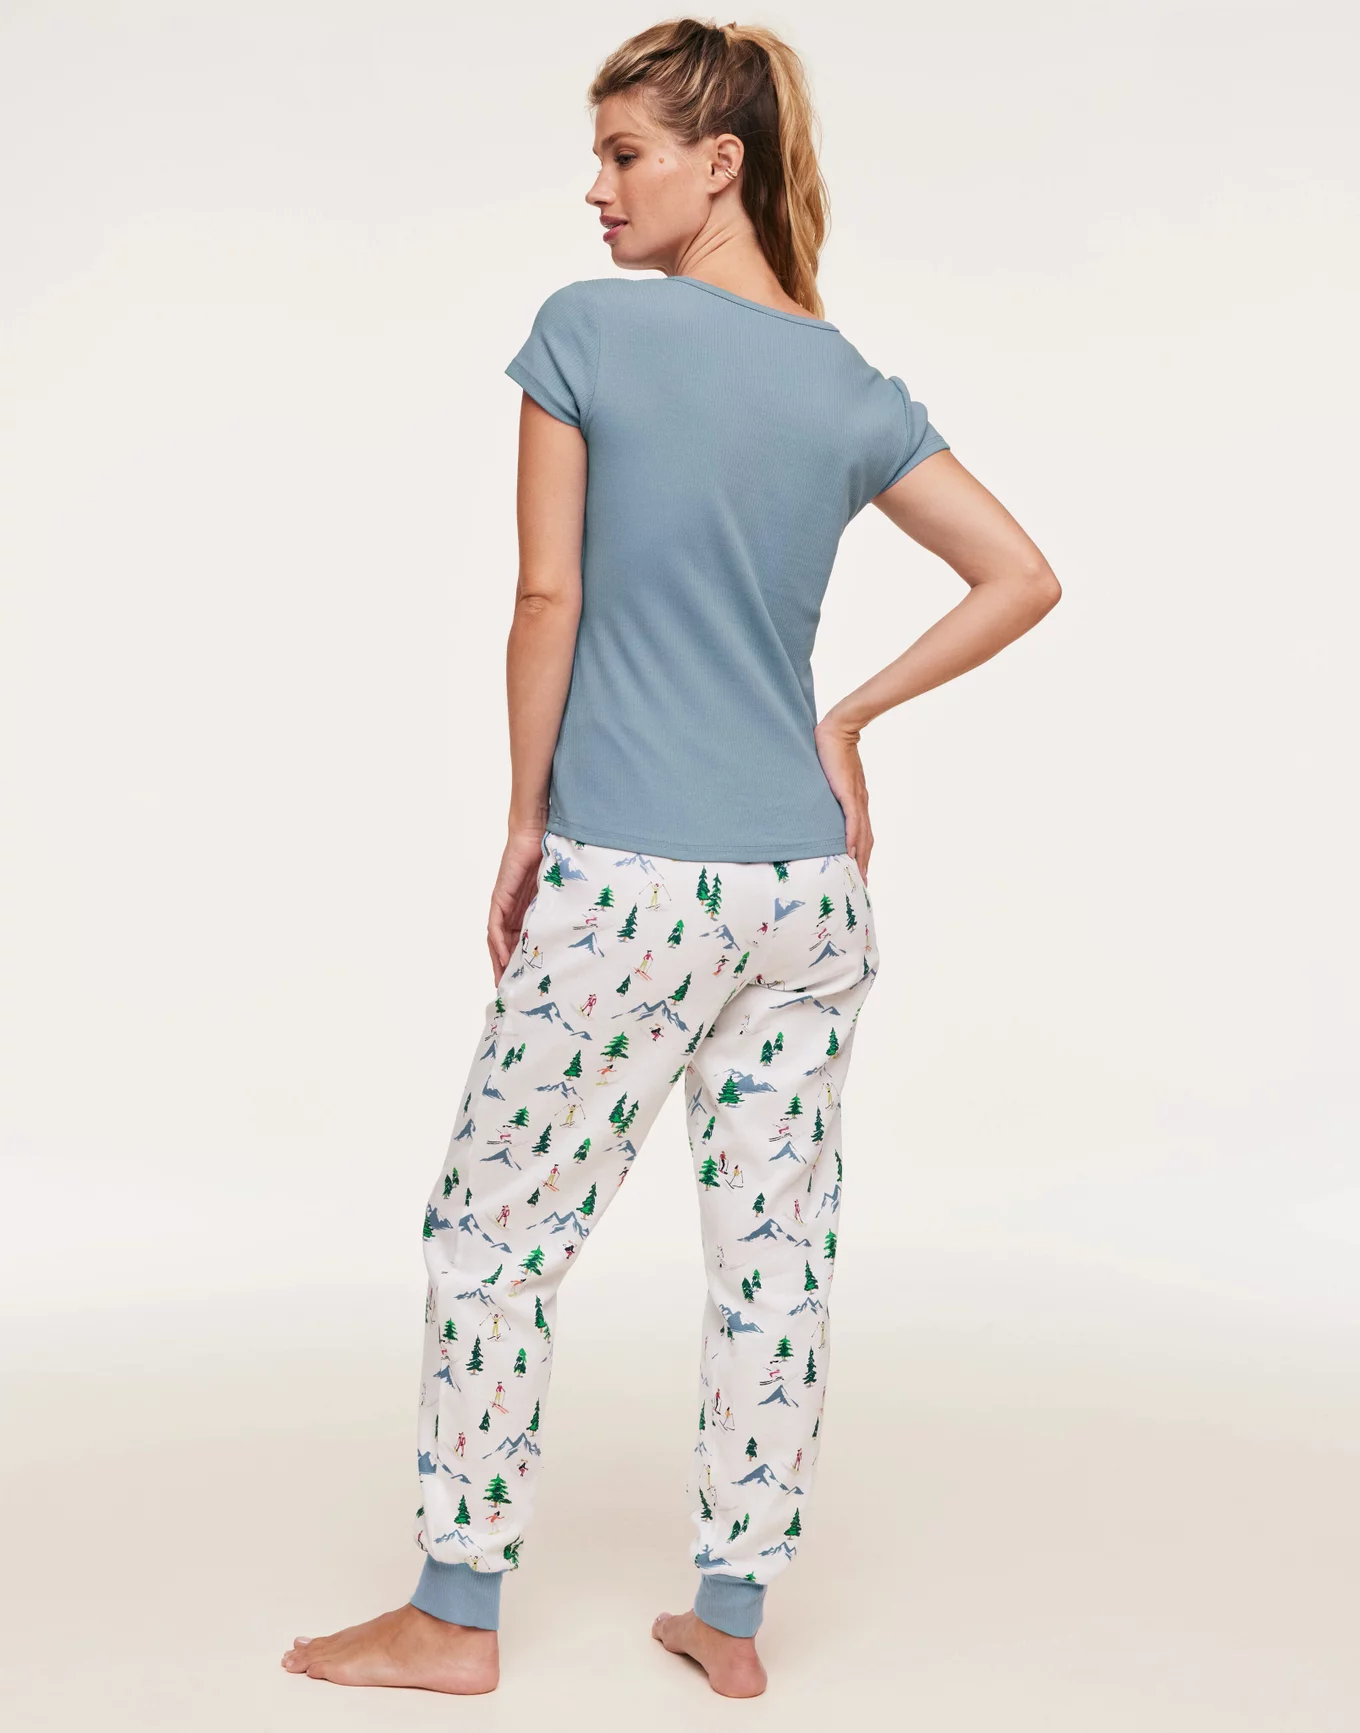 Lucky Brand Women's Pajama Set - 4 Piece Sleep Shirt, Tank Top, Pajama  Pants, Lounge Shorts (S-XL) : : Clothing, Shoes & Accessories